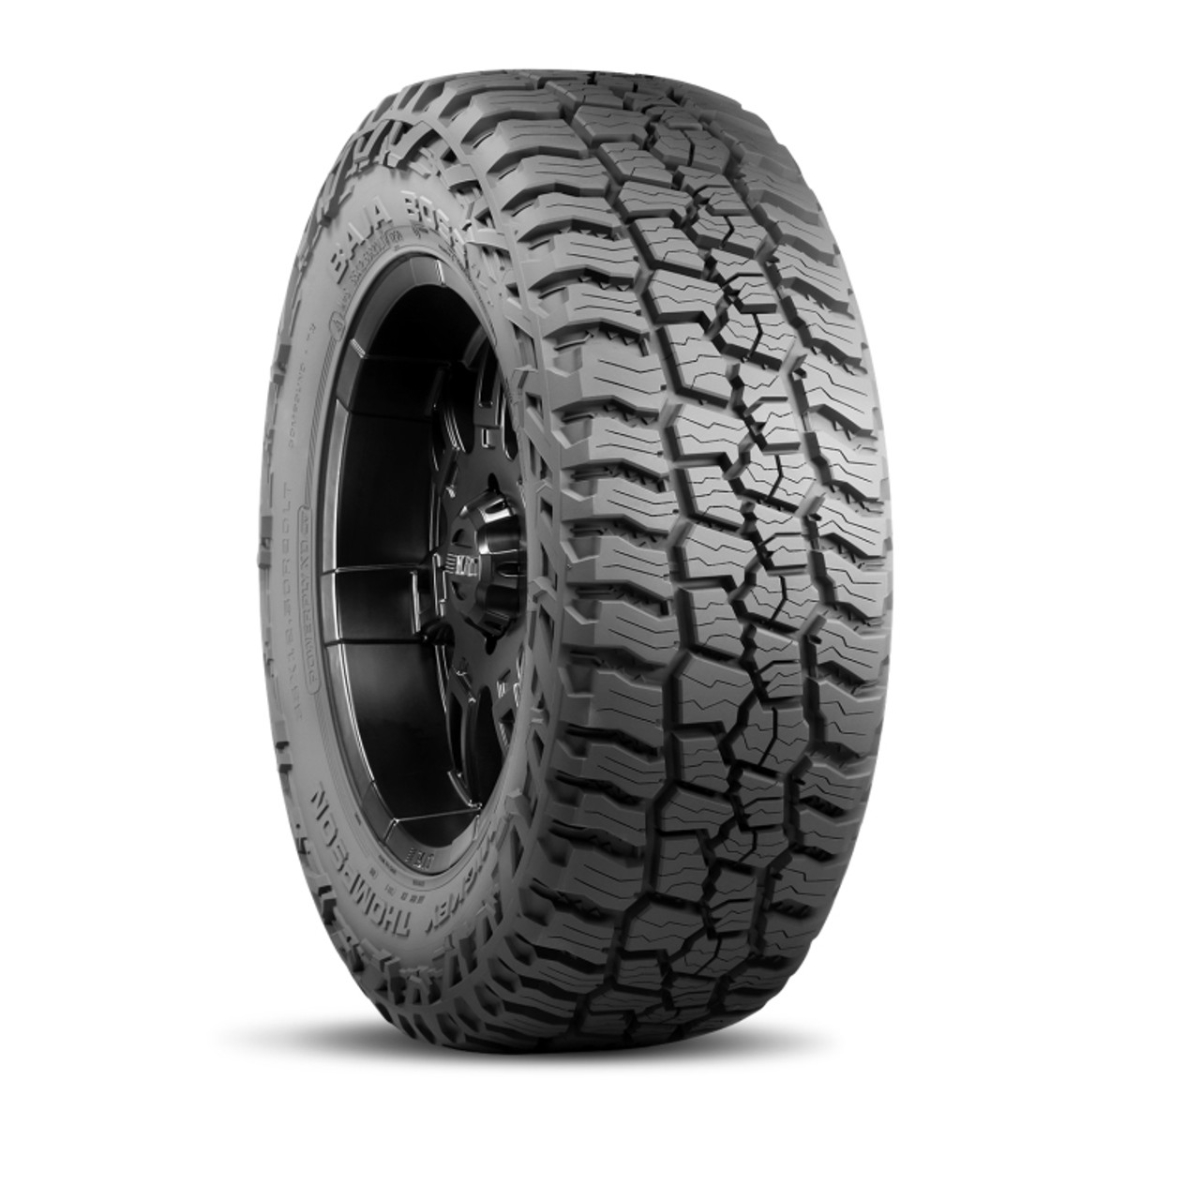 Picture of Mickey Thompson 36829 LT305-60R18 126-123Q Baja Boss Asymmetric Tread Tire